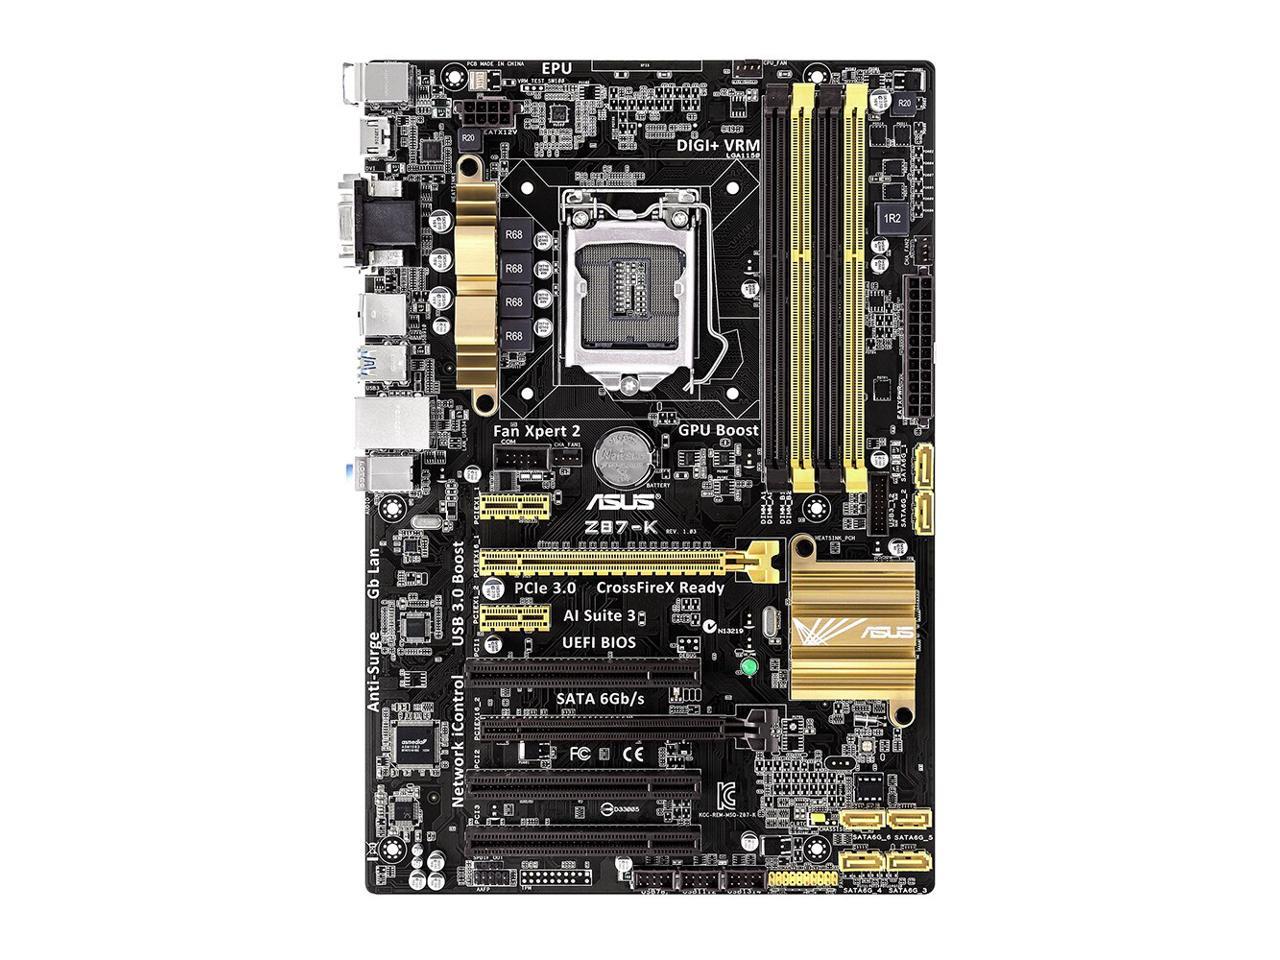 Asus Z87-K Motherboard Combo Set with Intel Core i5-4590 LGA 1150 CPU 4pcs  X 8GB = 32GB 1600MHz DDR3L Memory by Avarum Ram